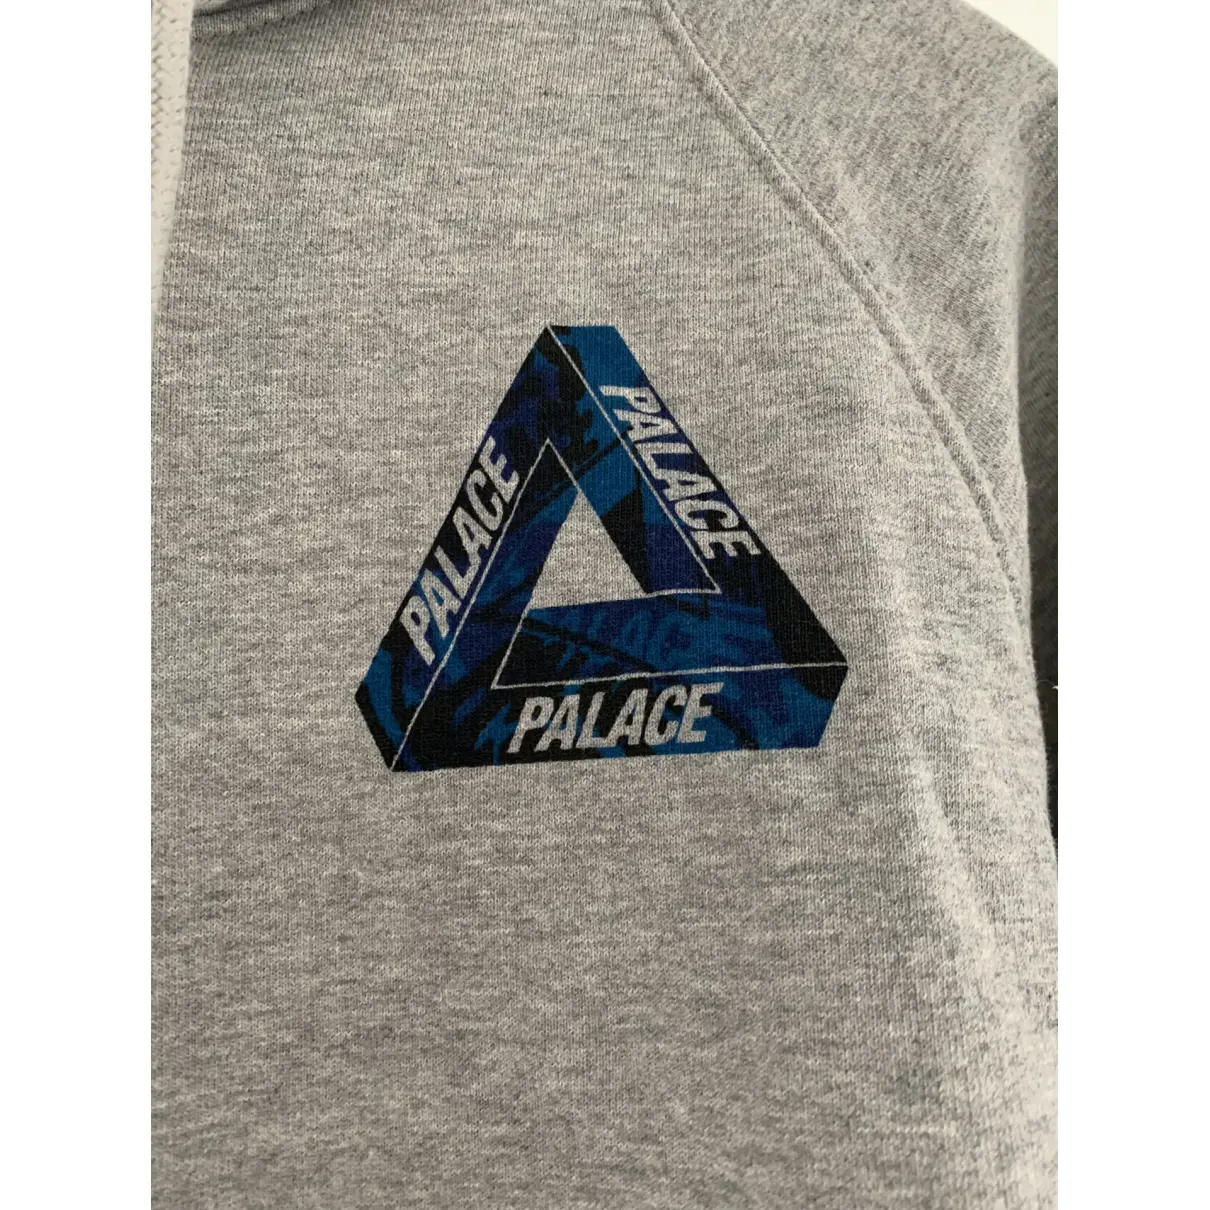 Buy Palace Sweatshirt online